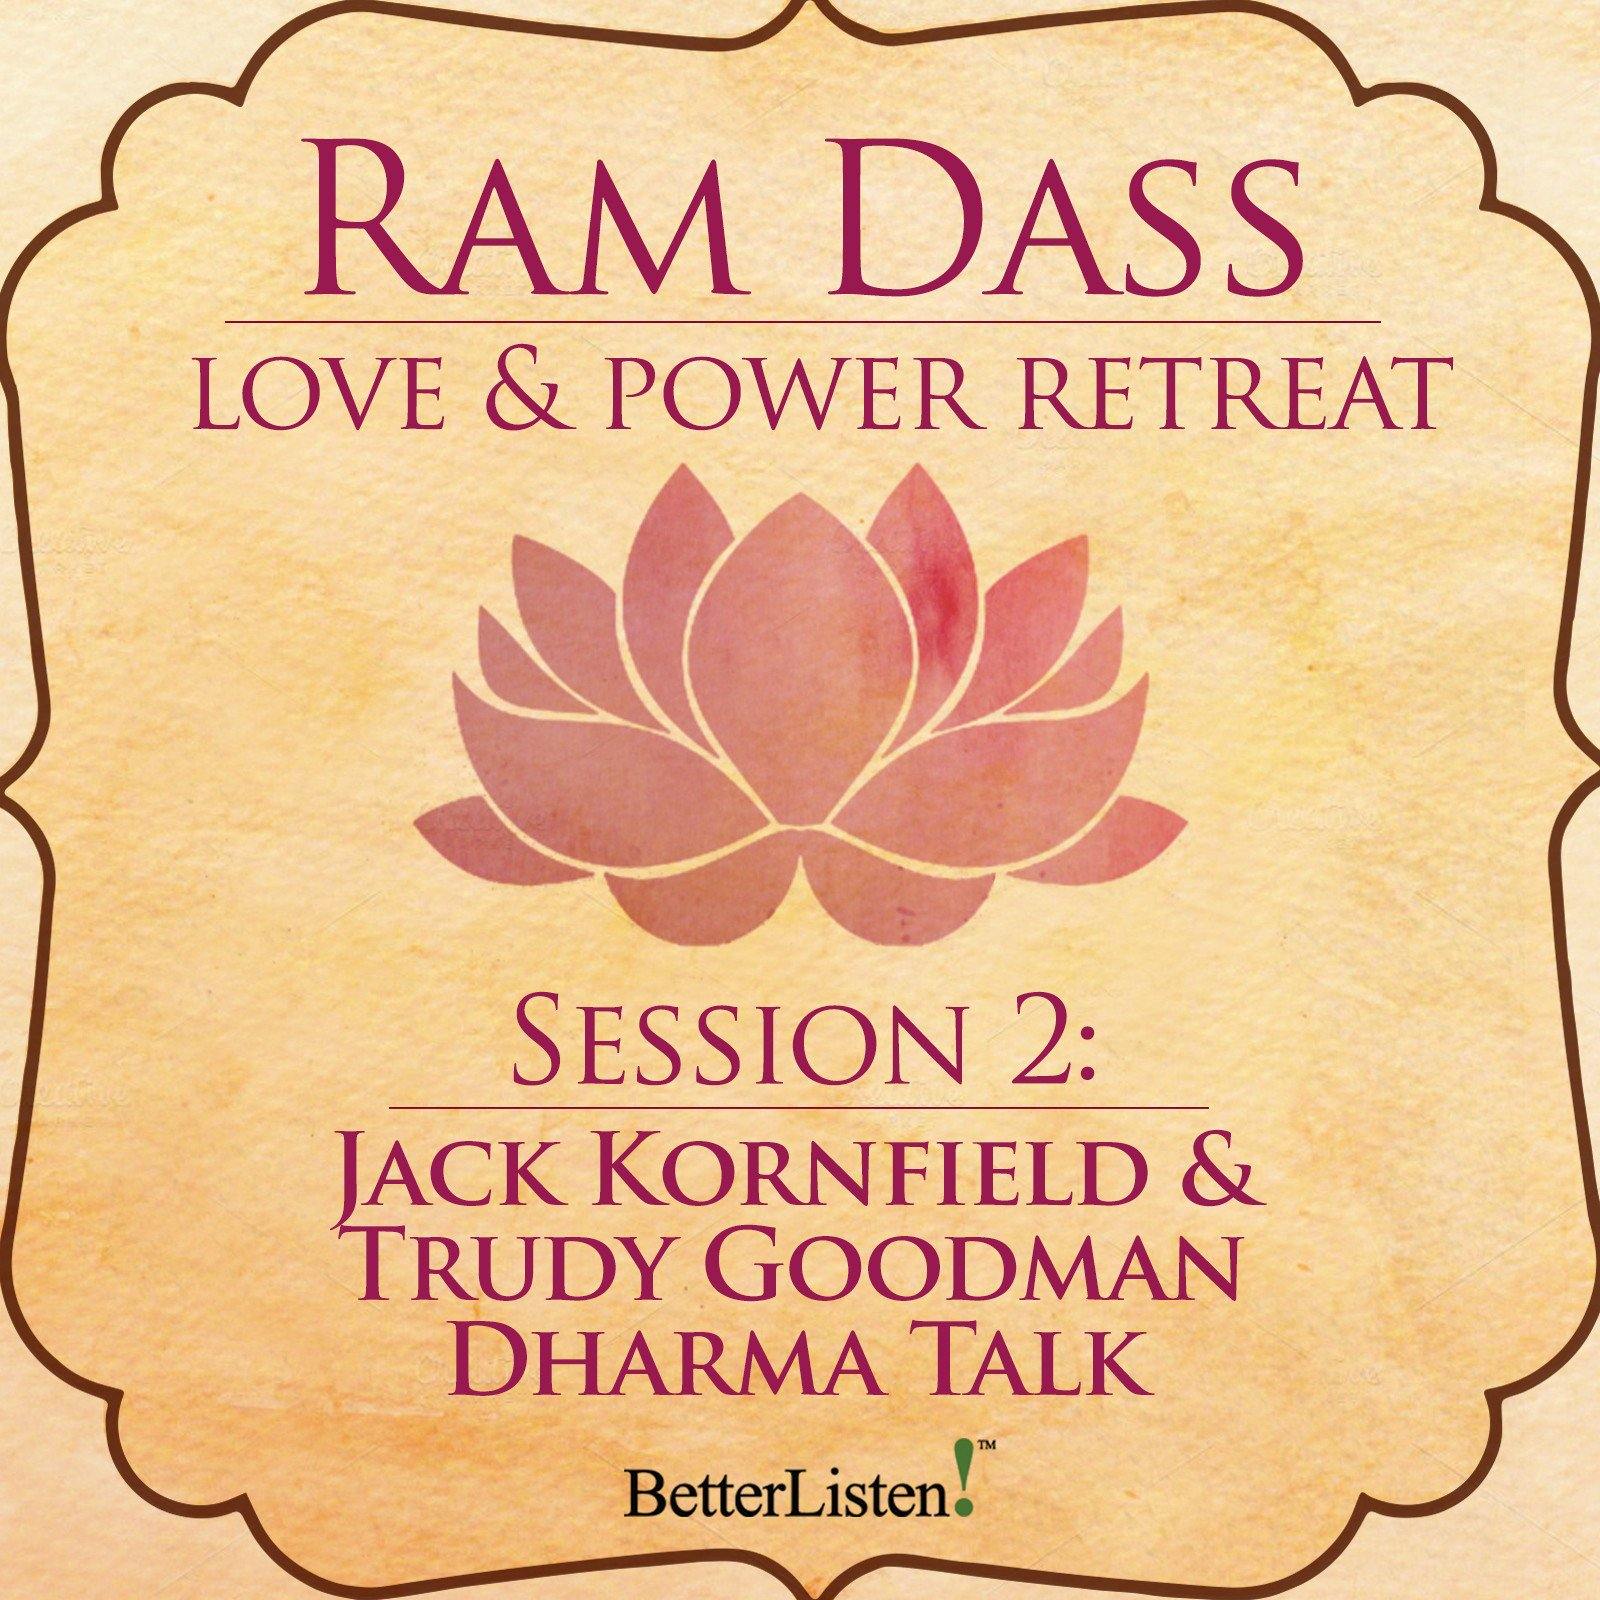 Jack Kornfield & Trudy Goodman Dharma Talk from the Love and Power Retreat Audio Program Ram Dass LSR - BetterListen!